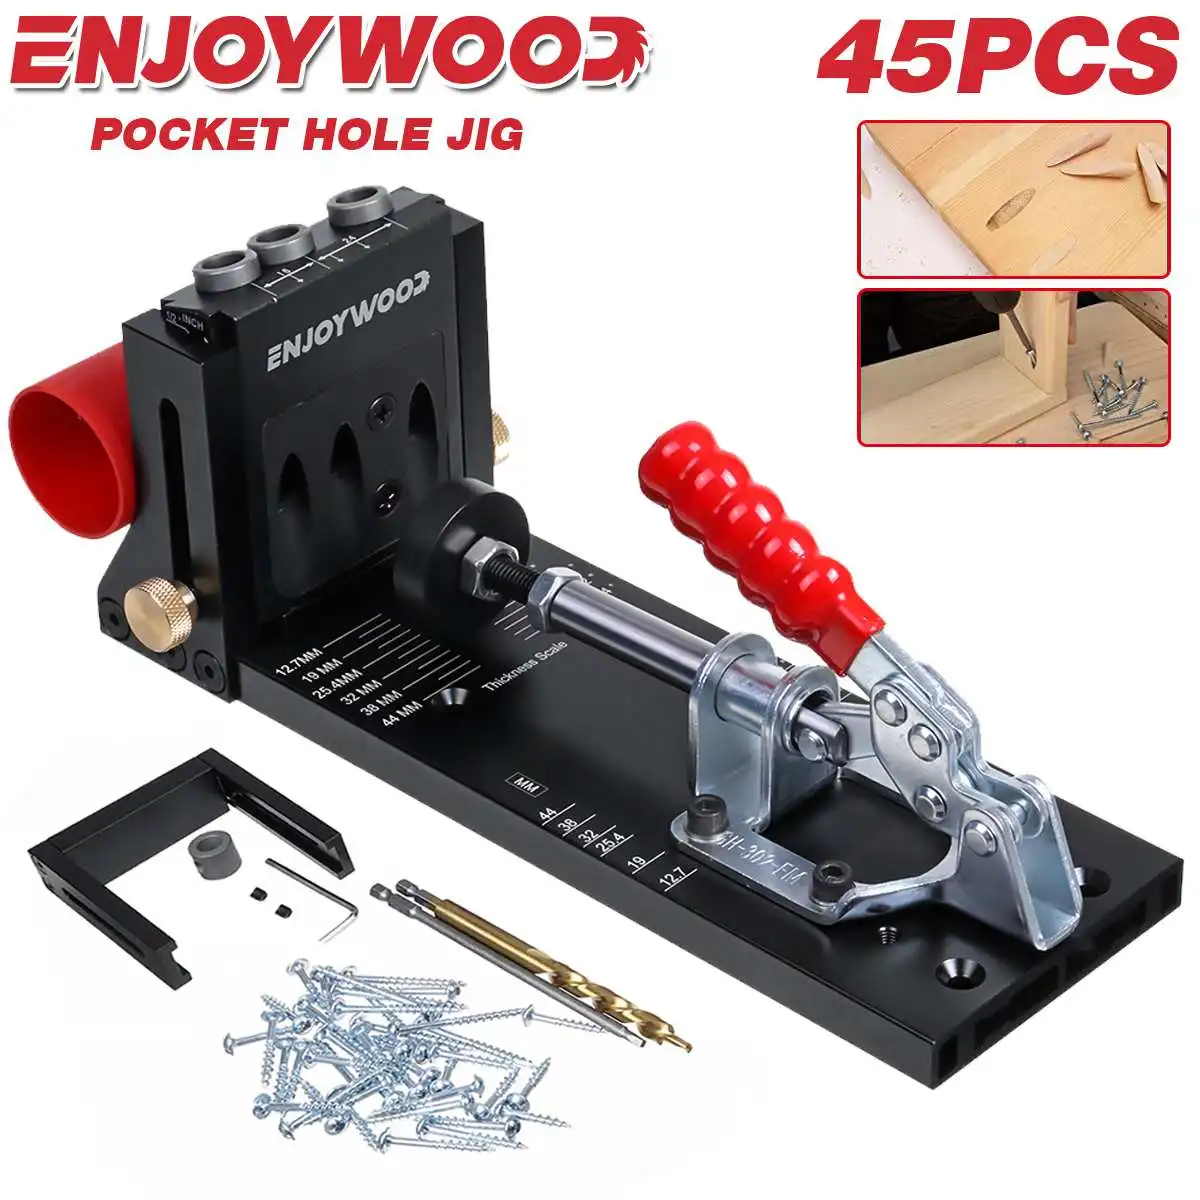 ENJOYWOOD 45Pcs 3-Hole 9.5mm Pocket Hole Jig Kit Aluminum Alloy Adjustable Woodworking Drilling Guide For Angled Holes Drill Bit